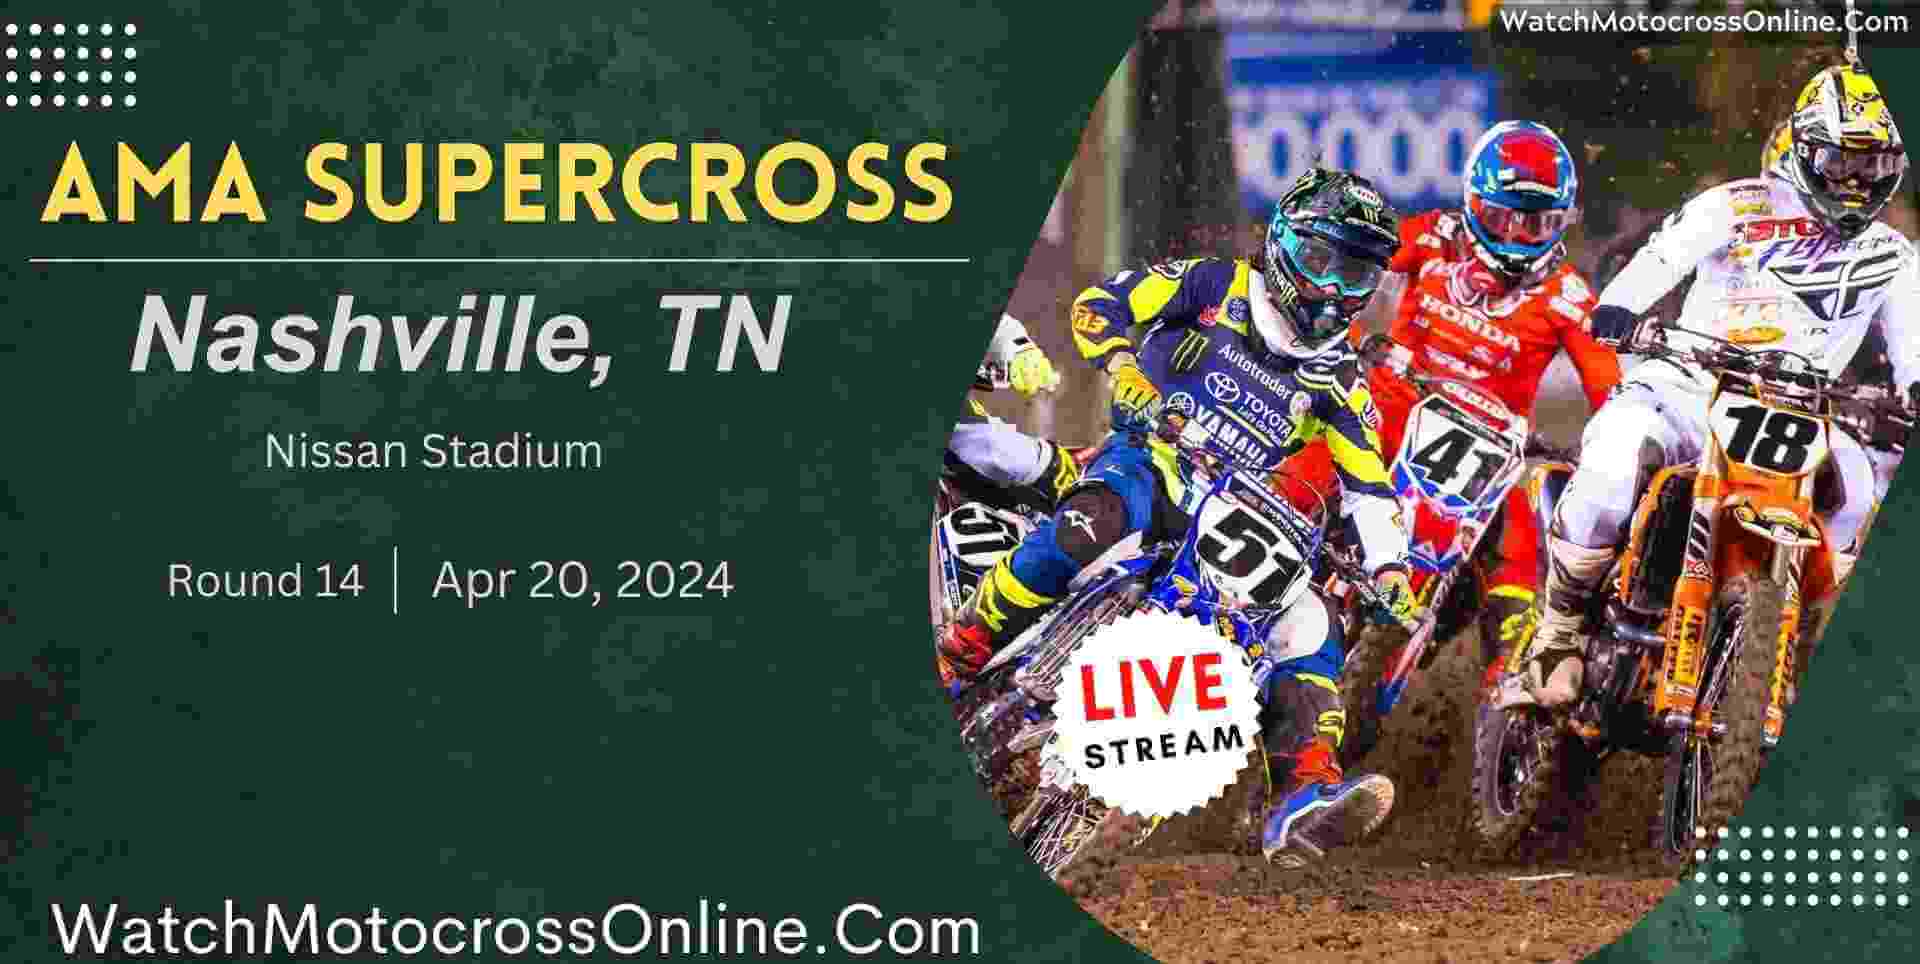 AMA Supercross Nashville Live Stream 2024 Round 14